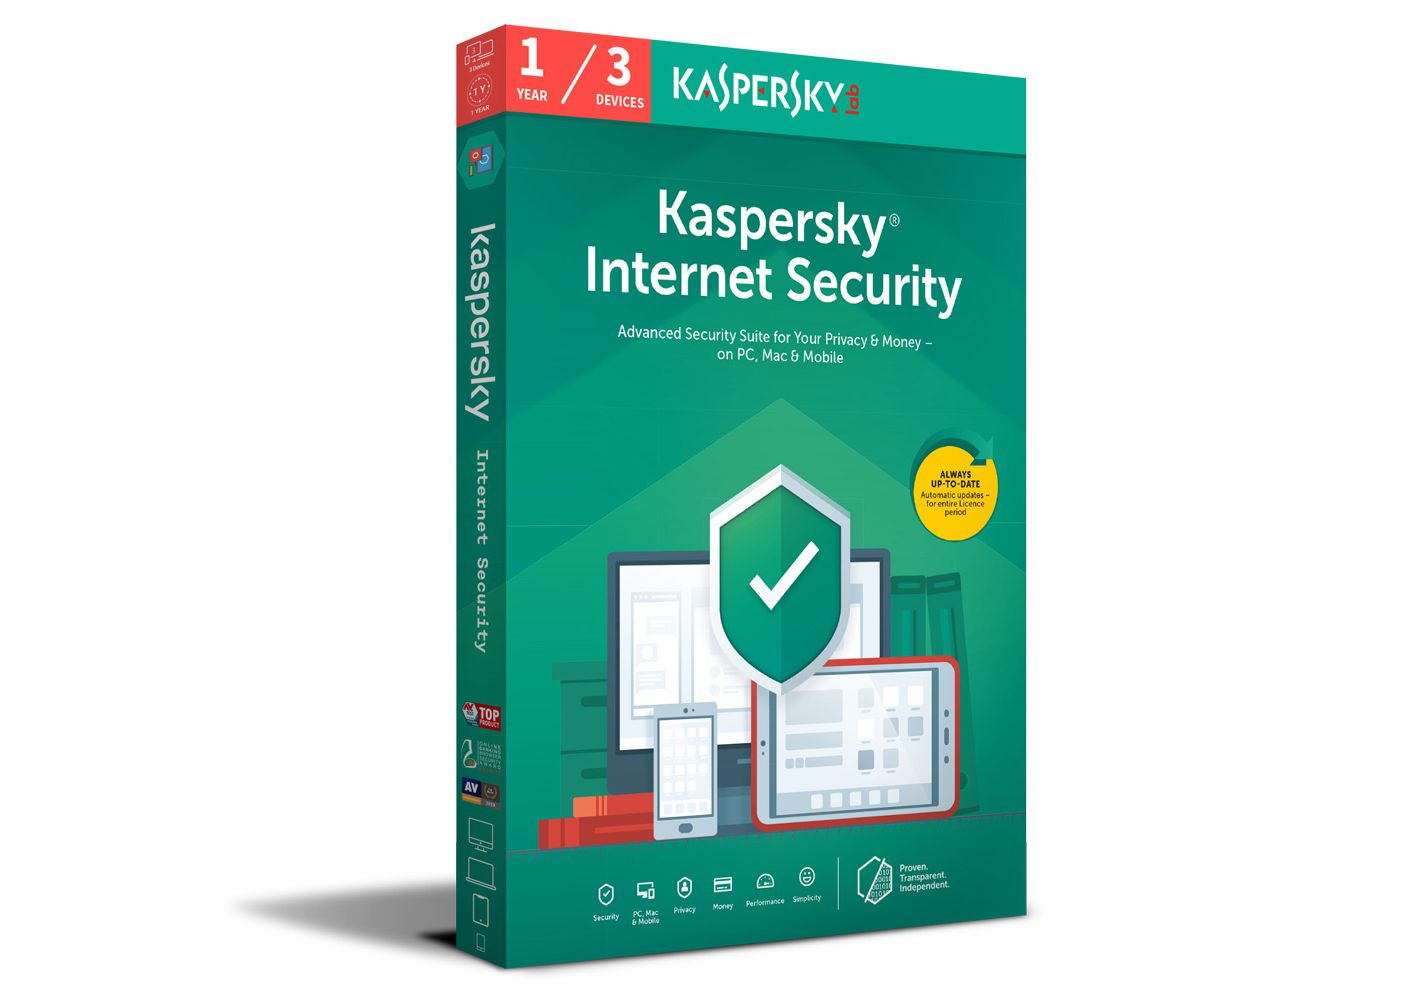 my kaspersky total security download